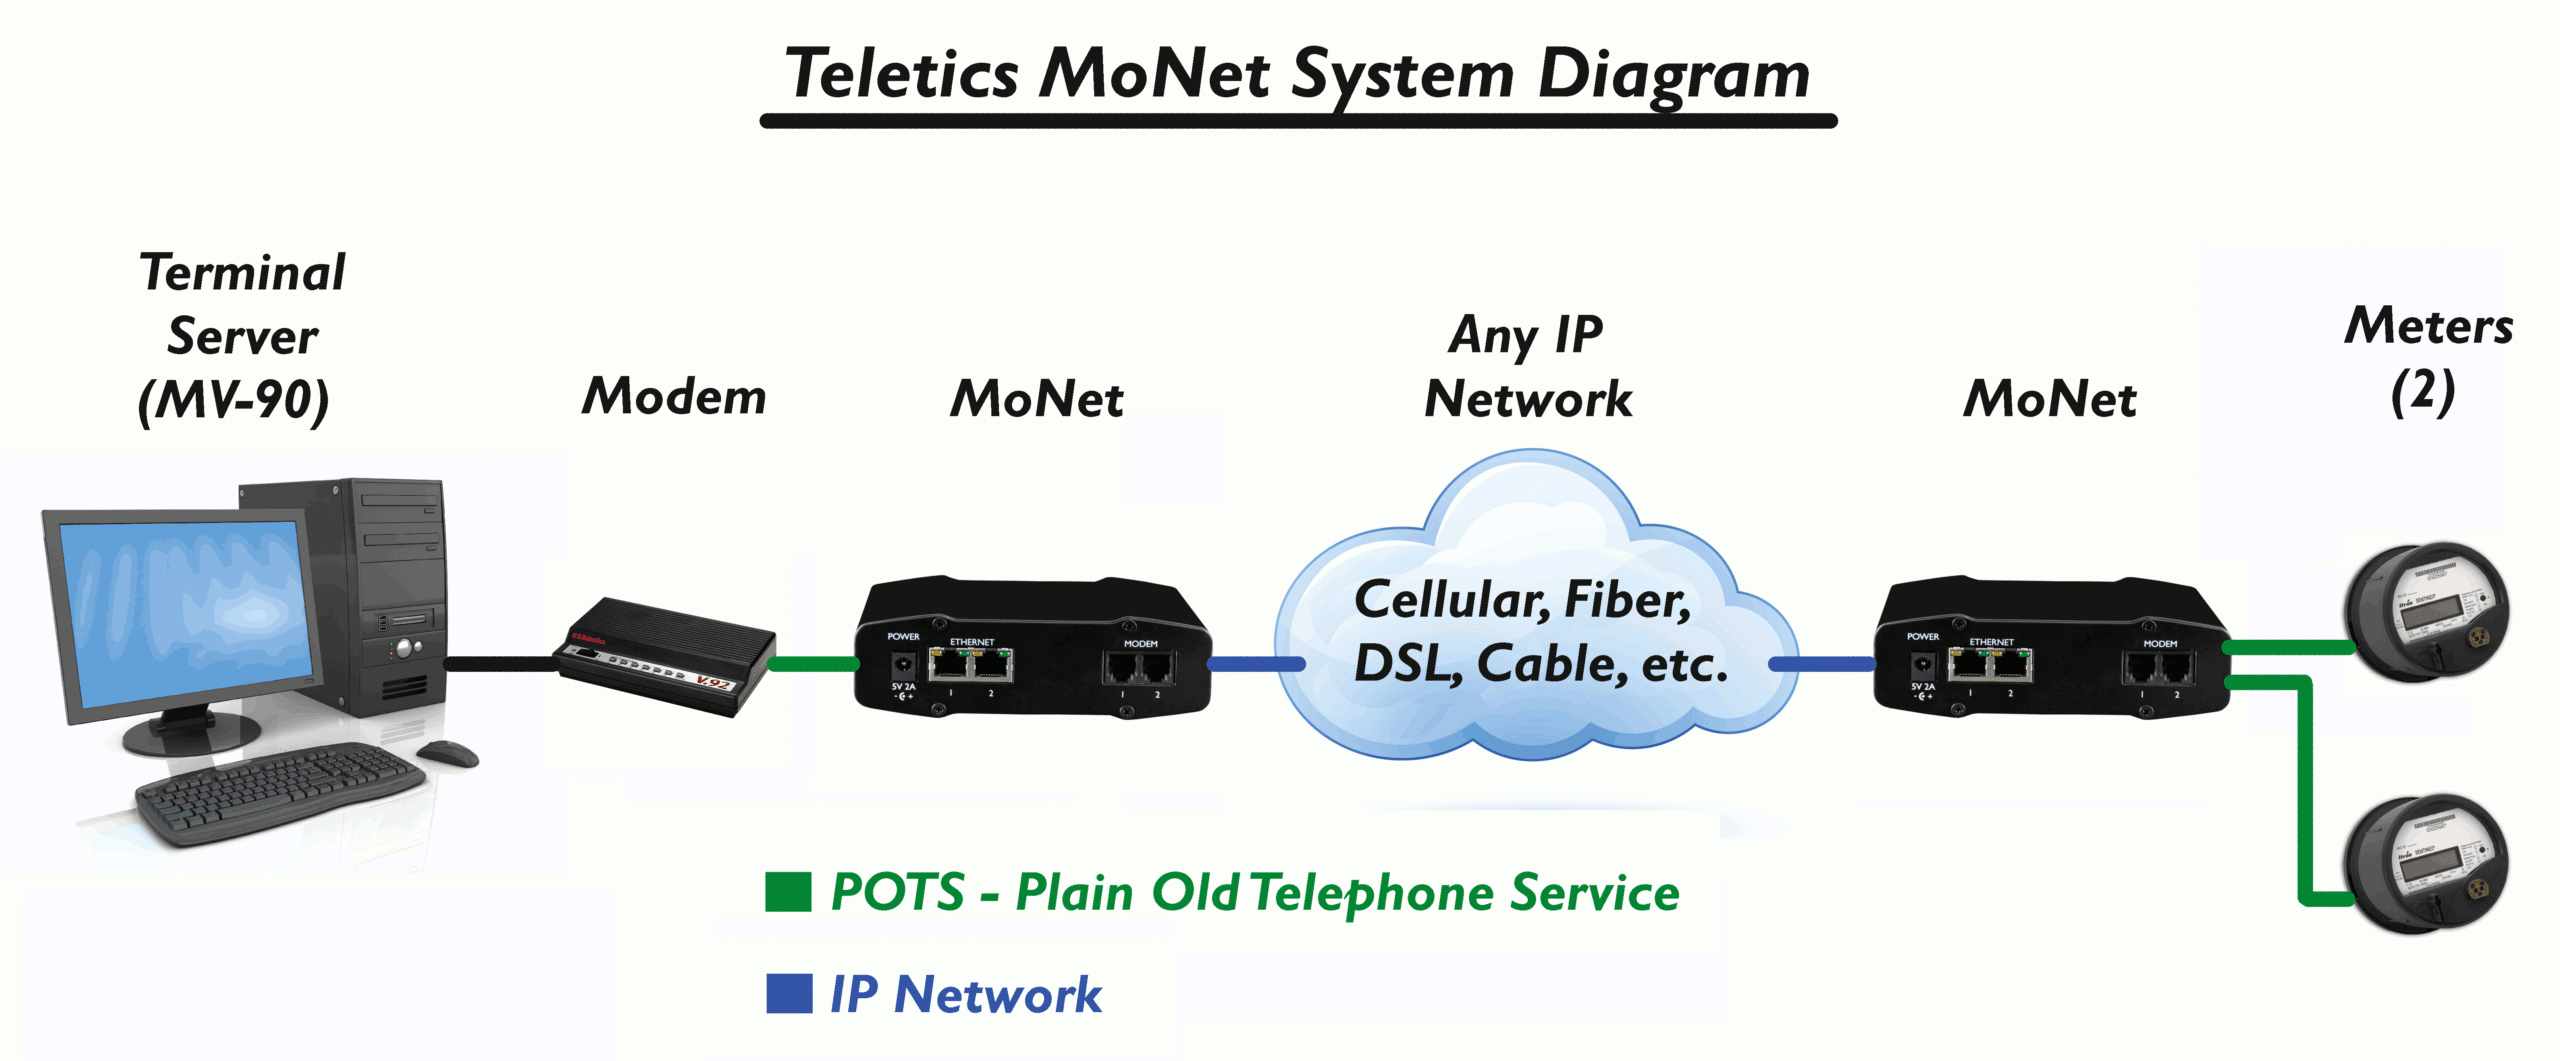 Monet Moip Gateway Uses Enhanced Modem Over Ip